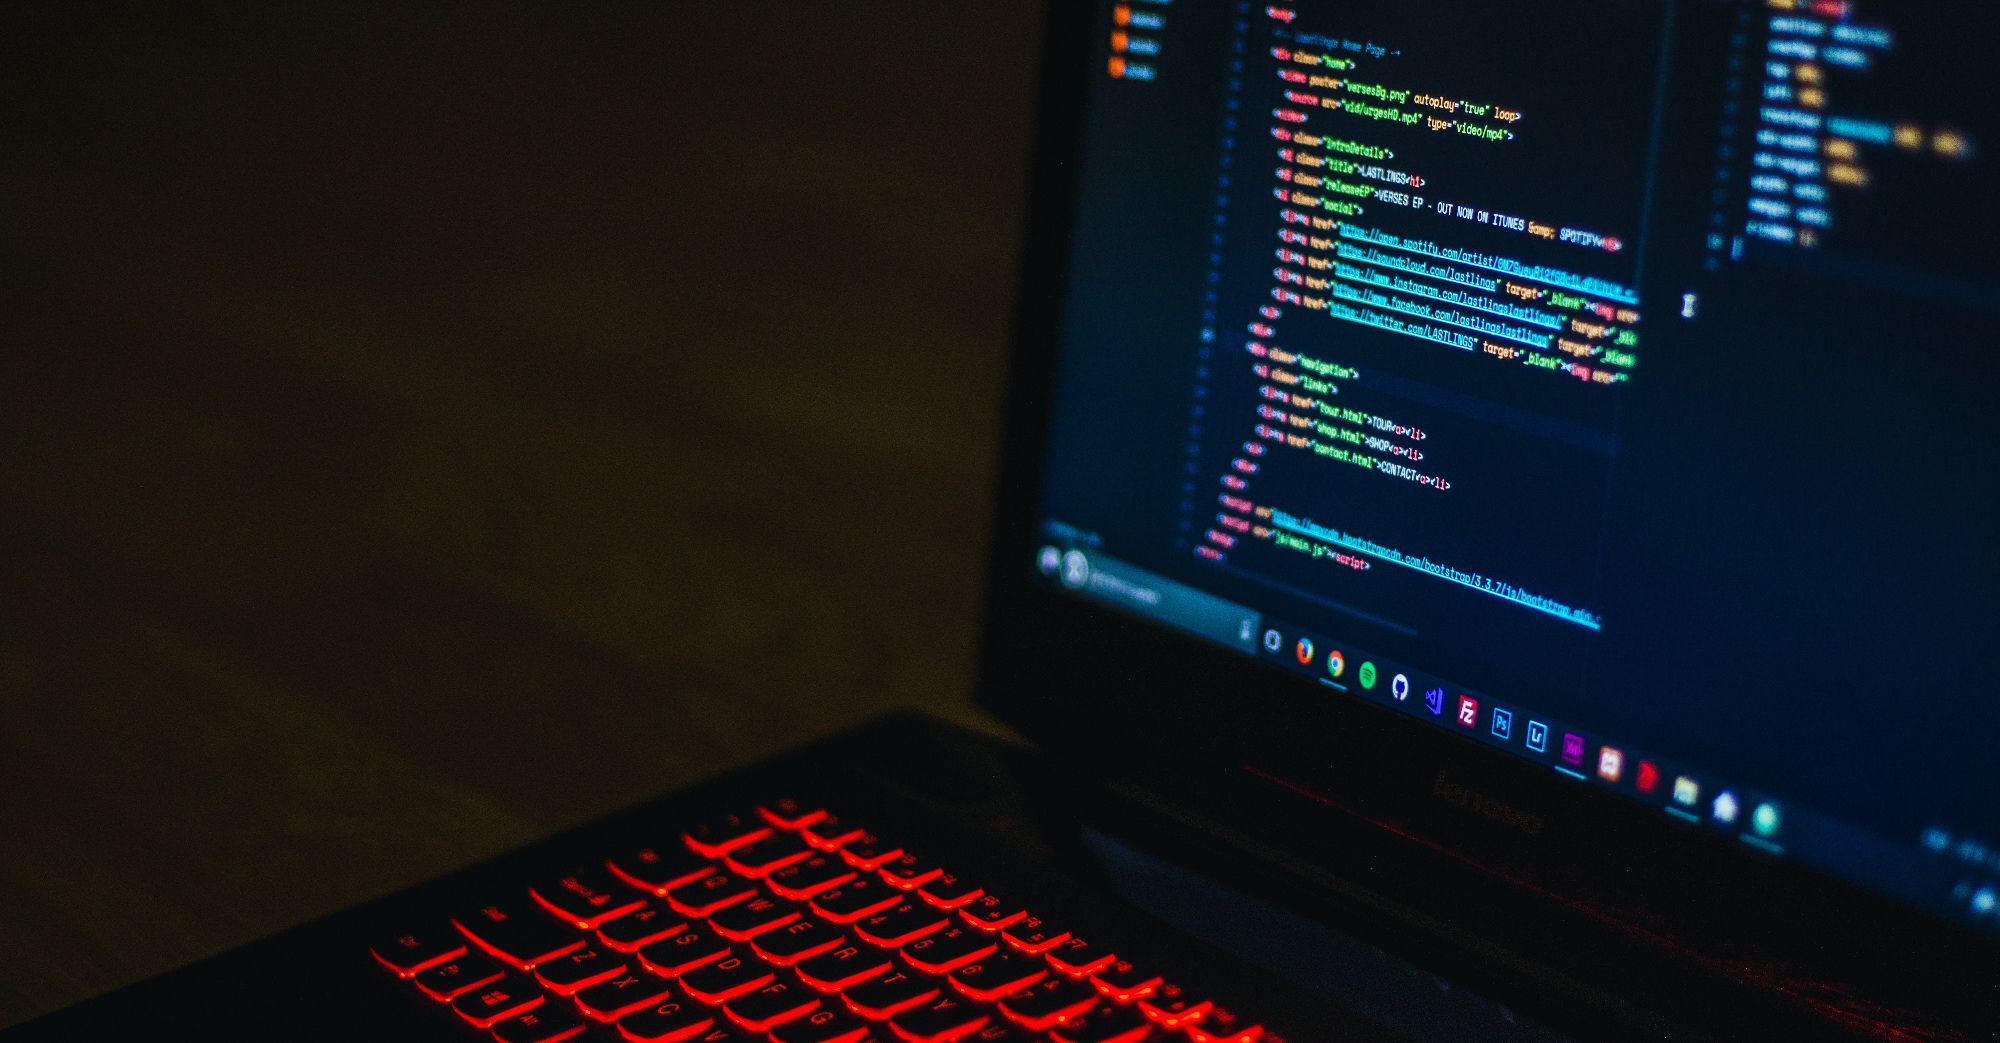 laptop di ruangan gelap dengan lampu latar keyboard merah dan kode di layar